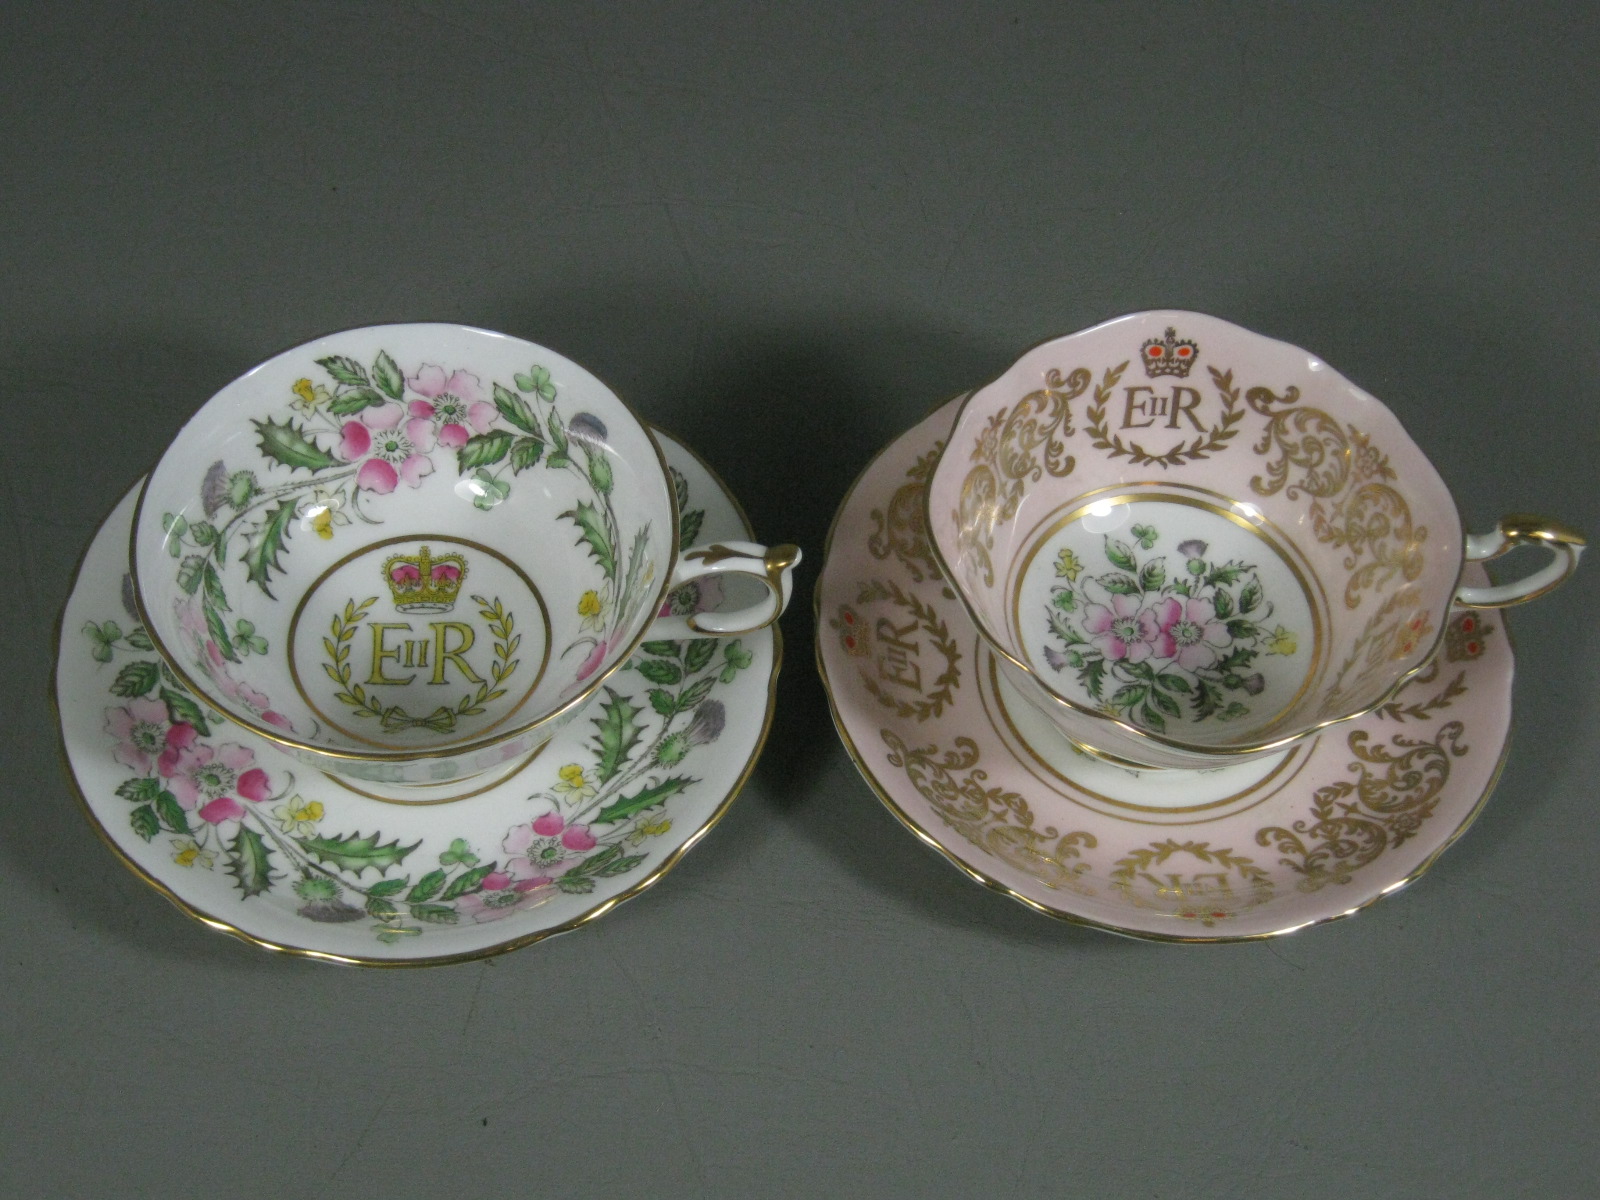 2 Paragon Bone China Queen Elizabeth II 1953 Coronation Tea Cups Teacups Saucers 1